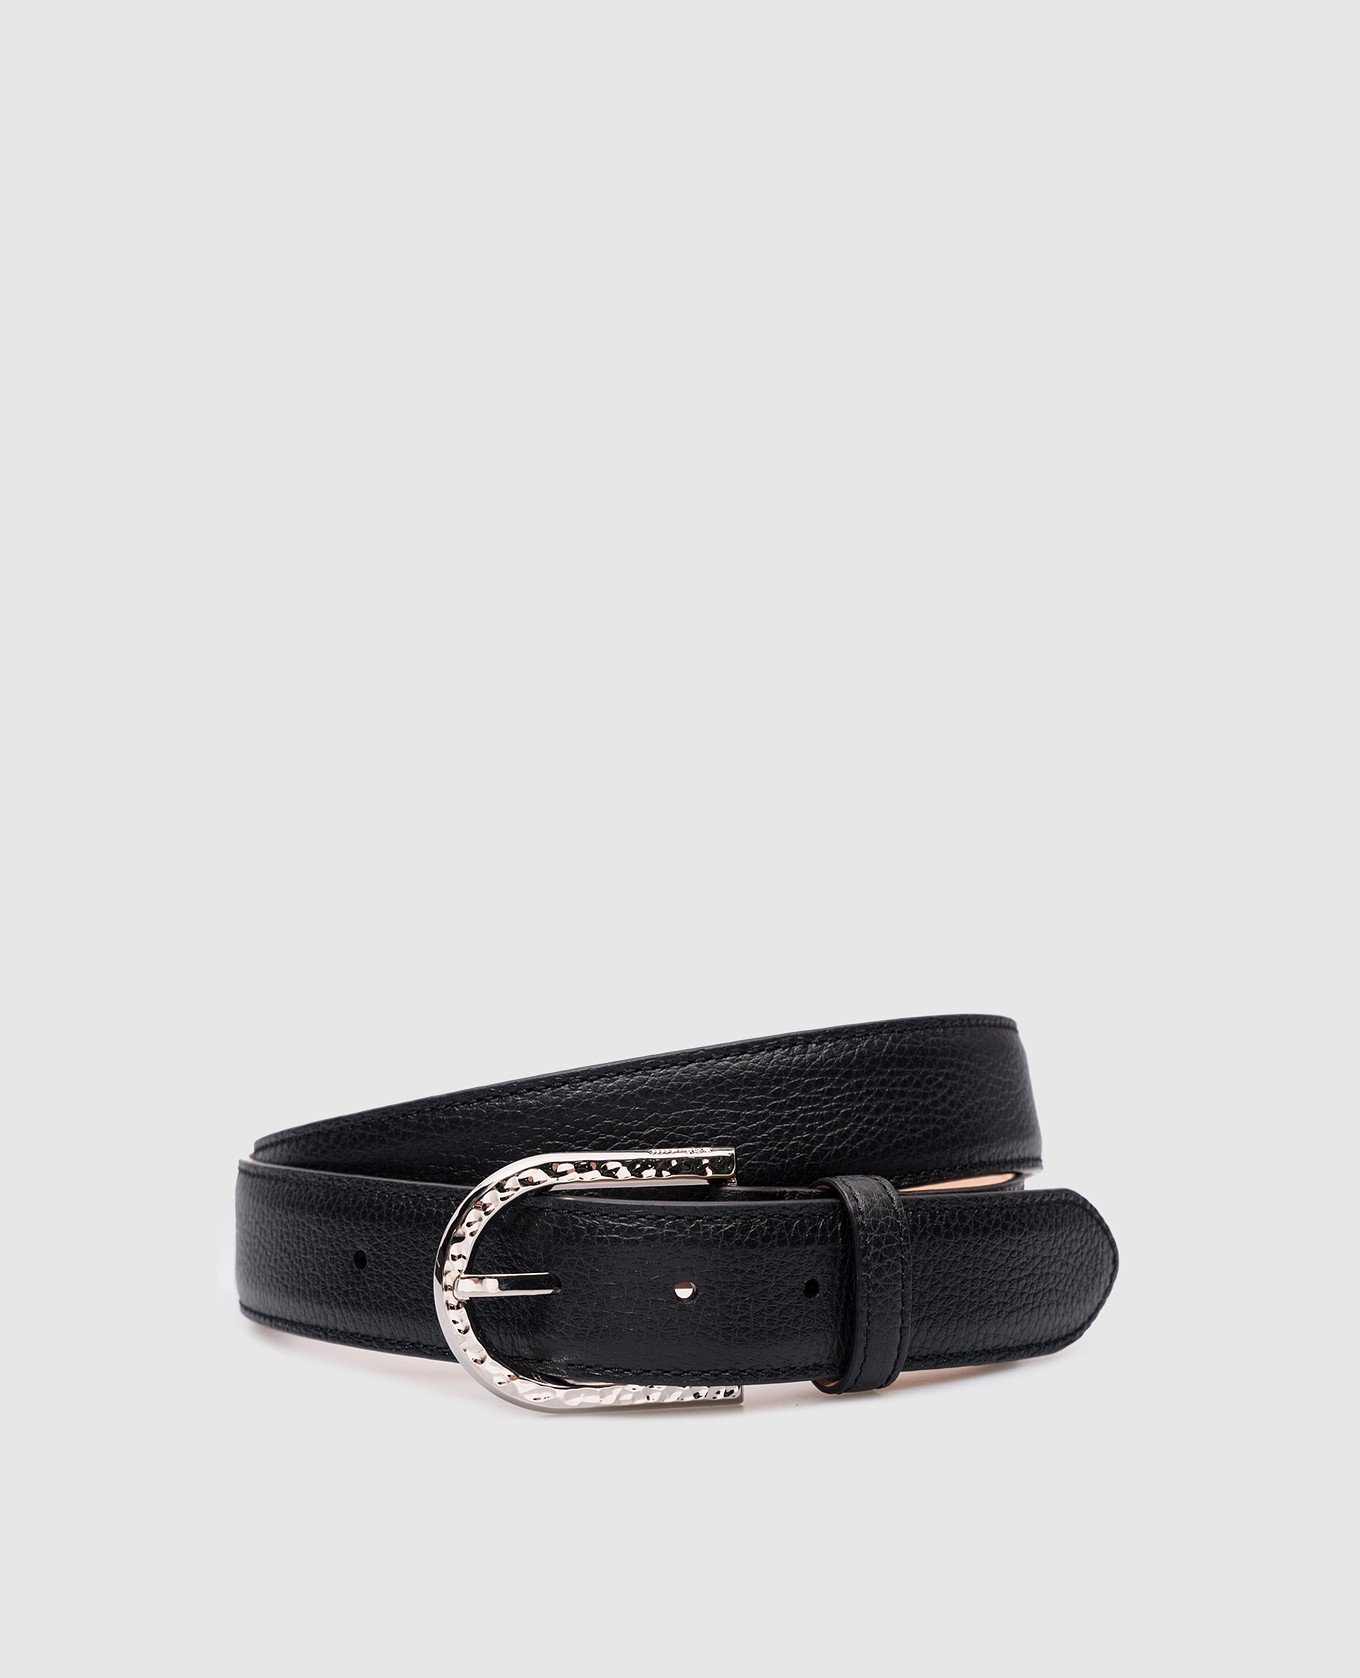 Black embossed leather strap